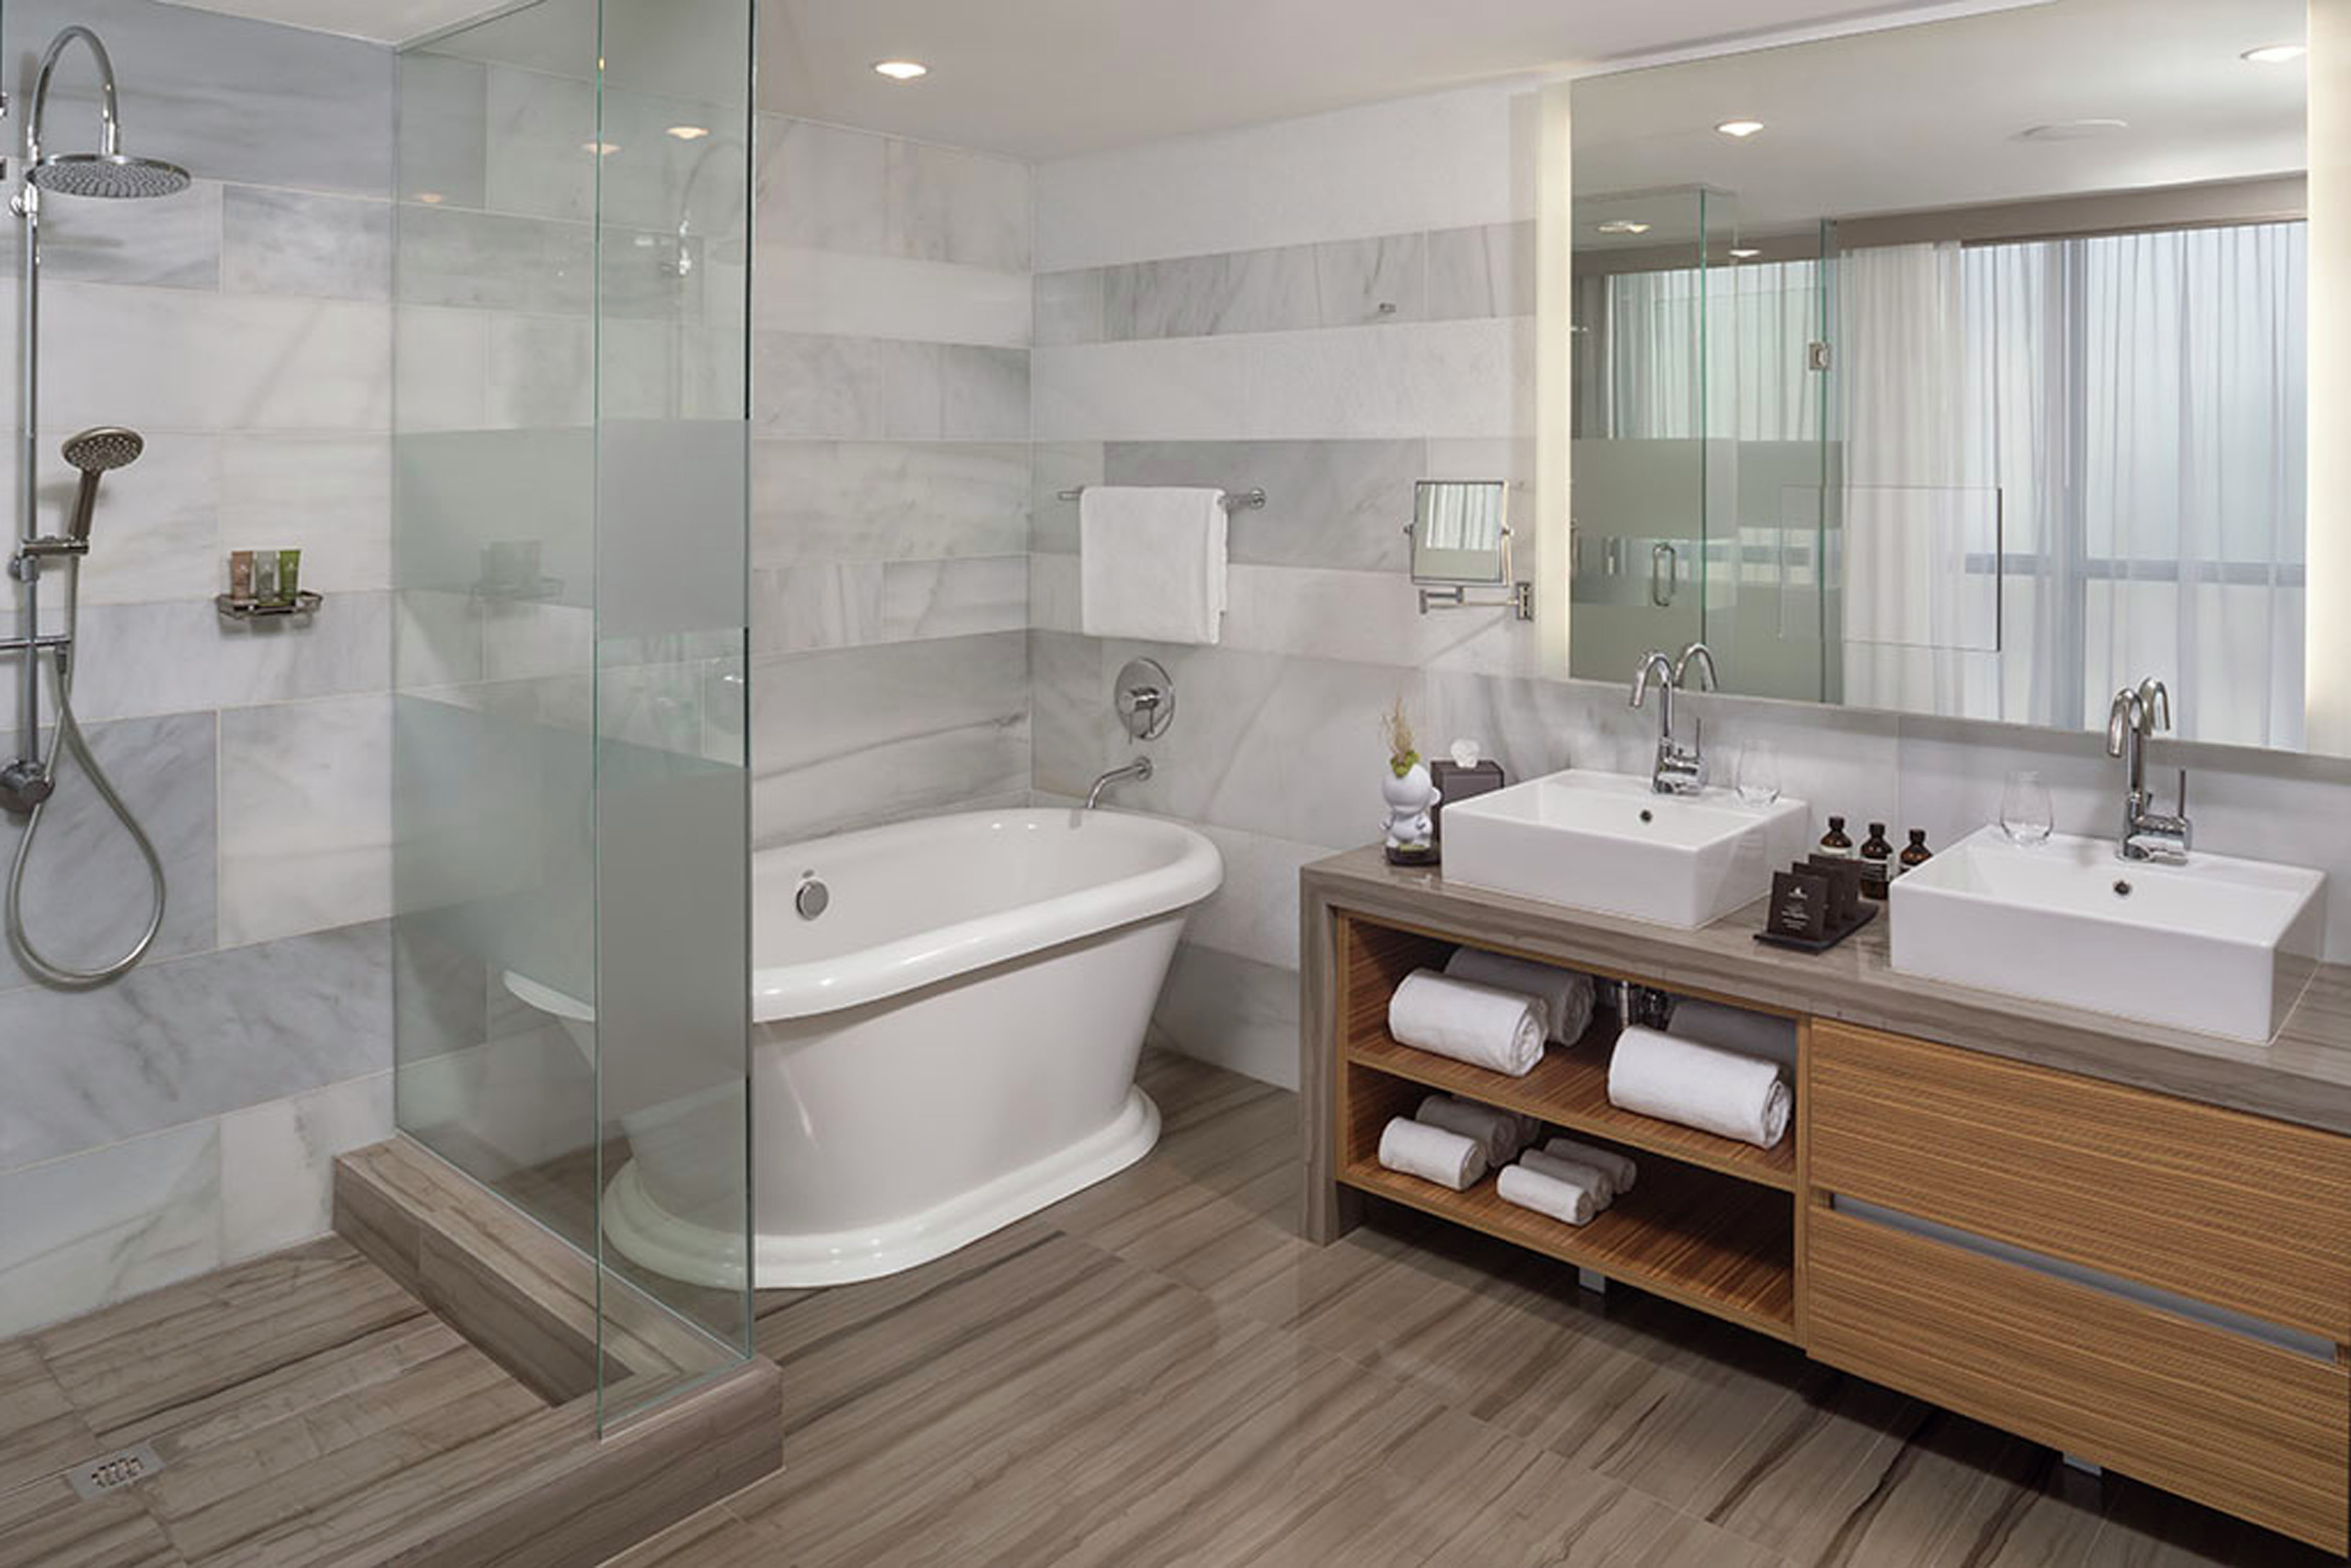 Suite Guestroom with Mirror, Dual Vanity, Walk-In Shower, and Bathtub